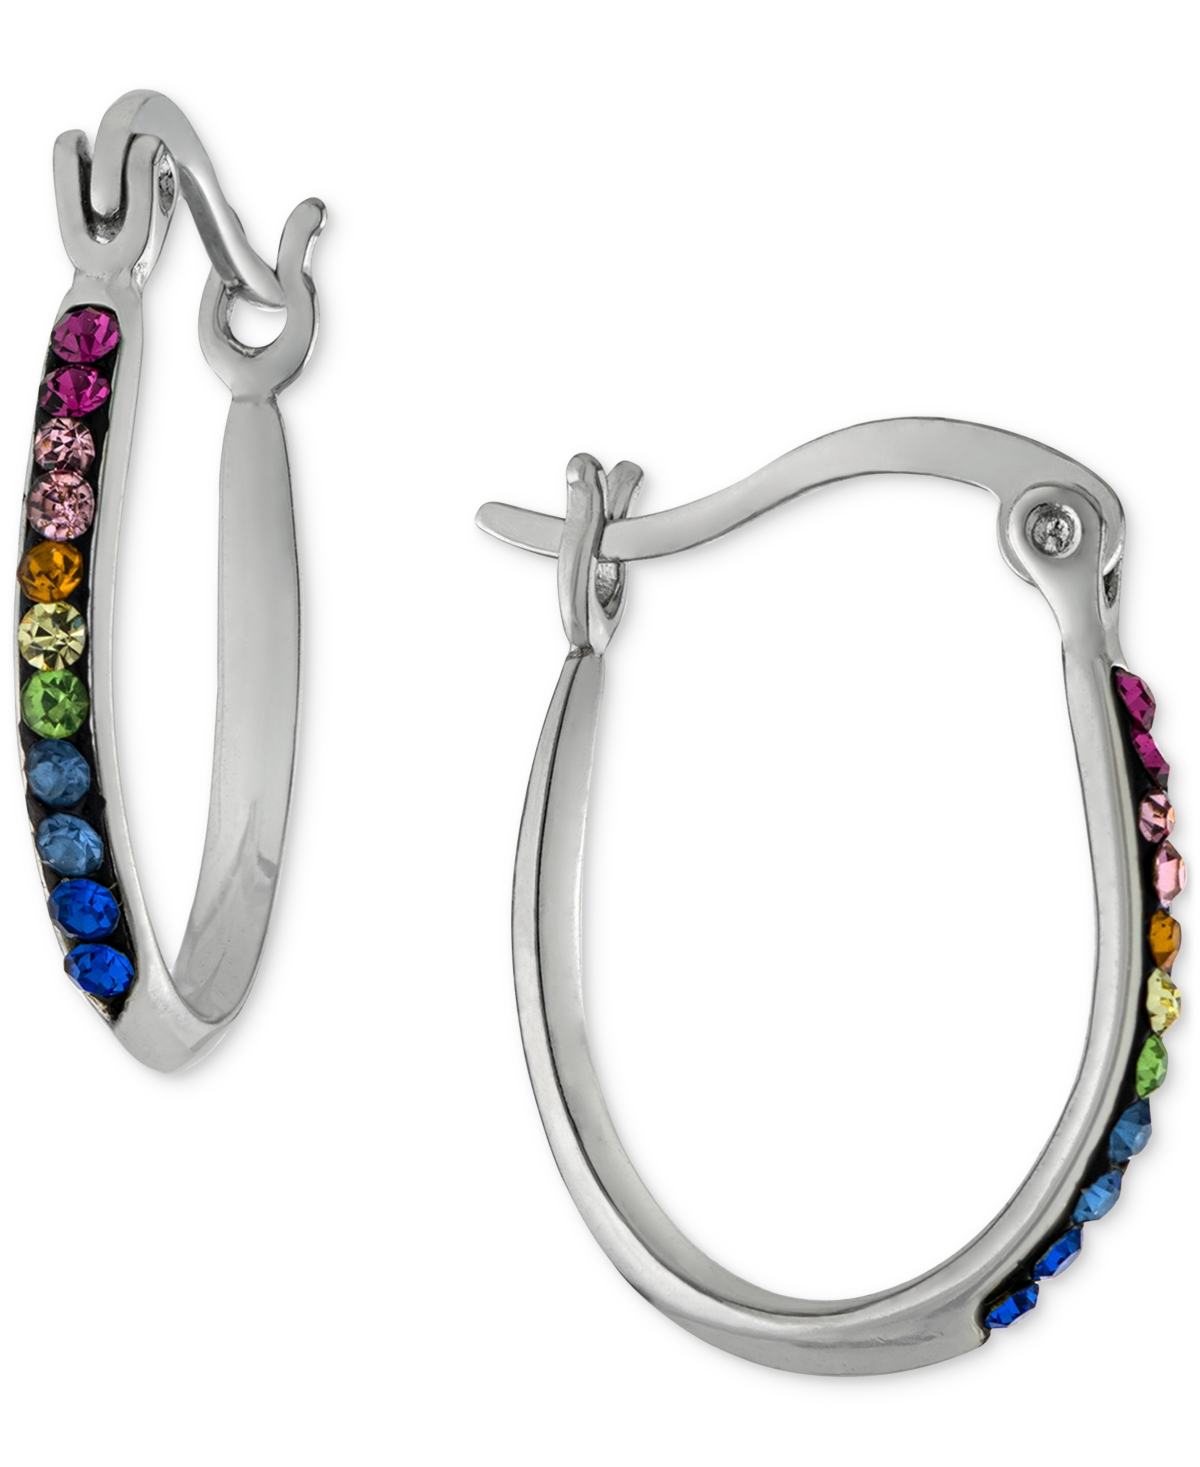 Rainbow Crystal Oval Hoop Earrings in Sterling Silver, Created for Macy's - Multi